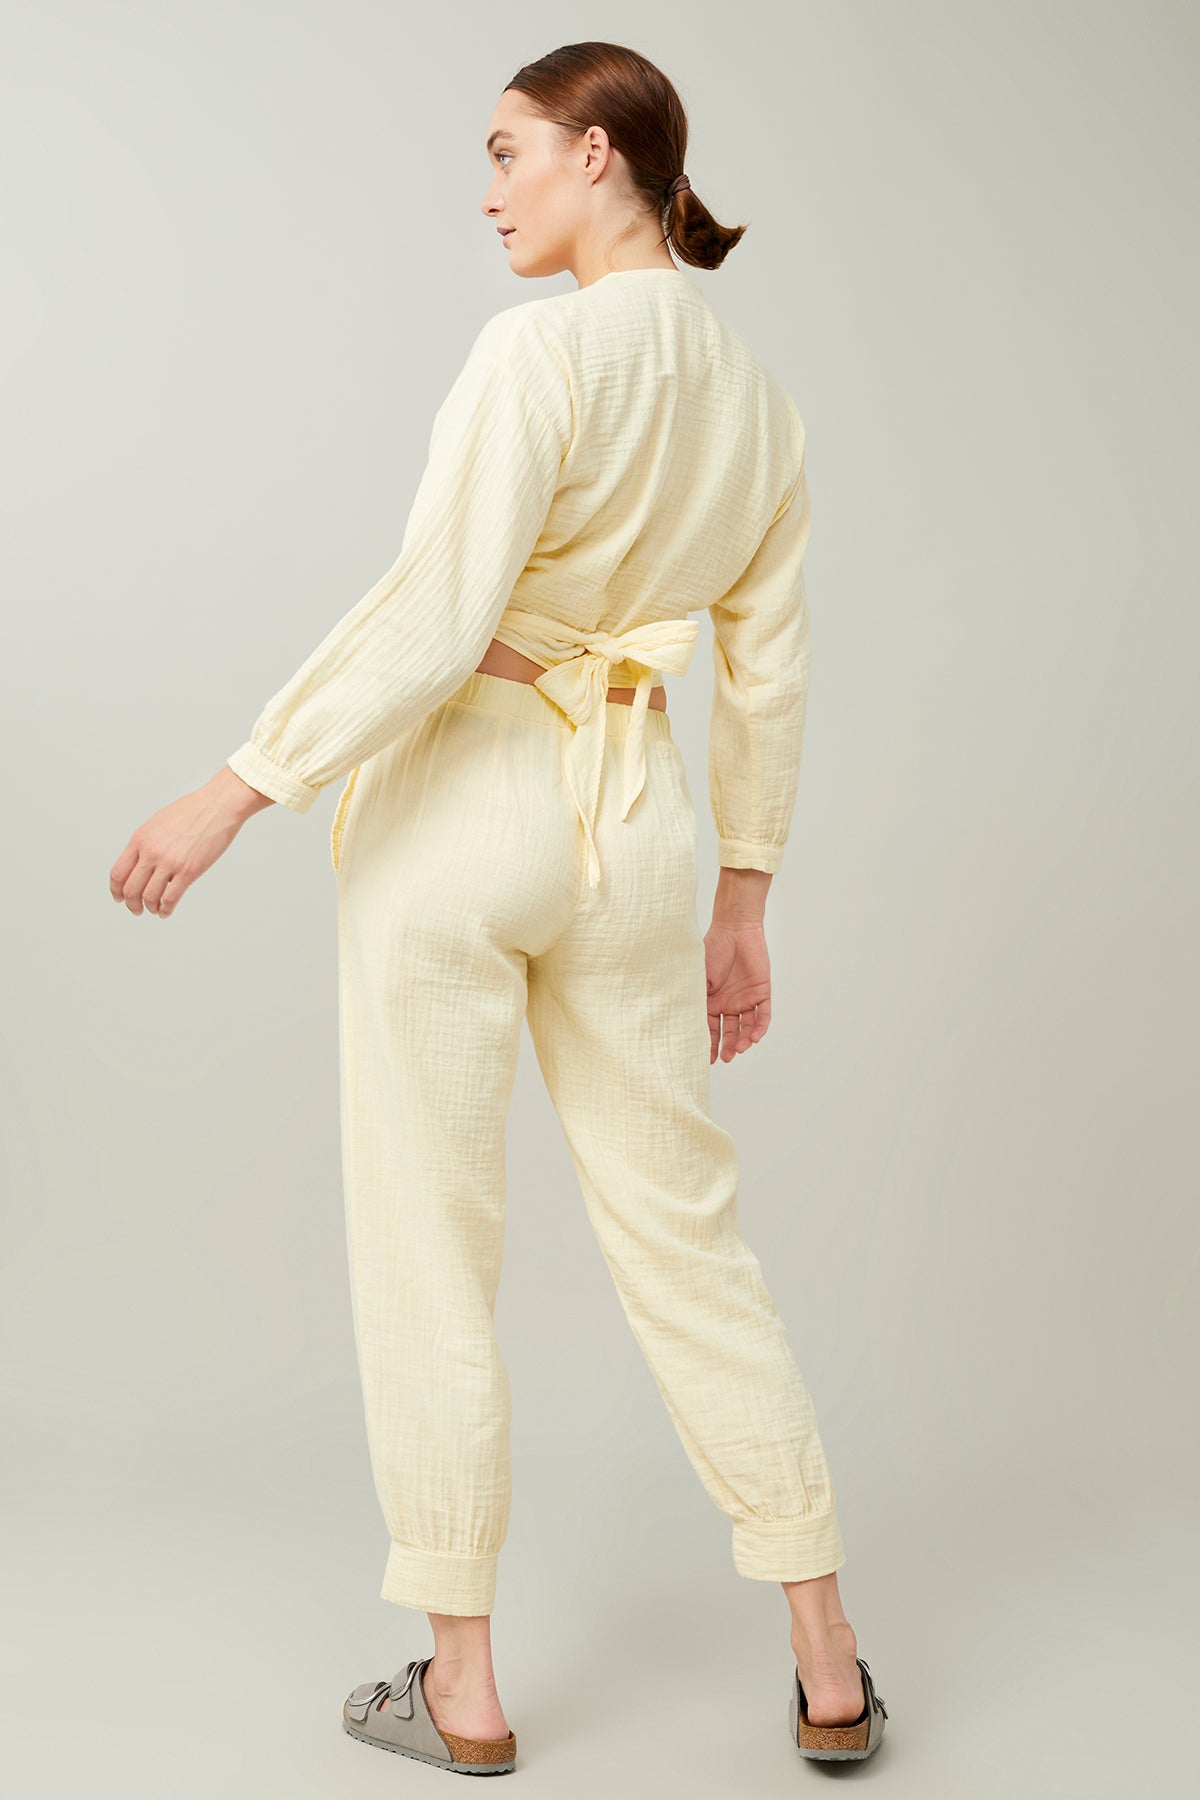 Mandala Yoga Jacke Gelb Outfit Rückseite - Wrap Top